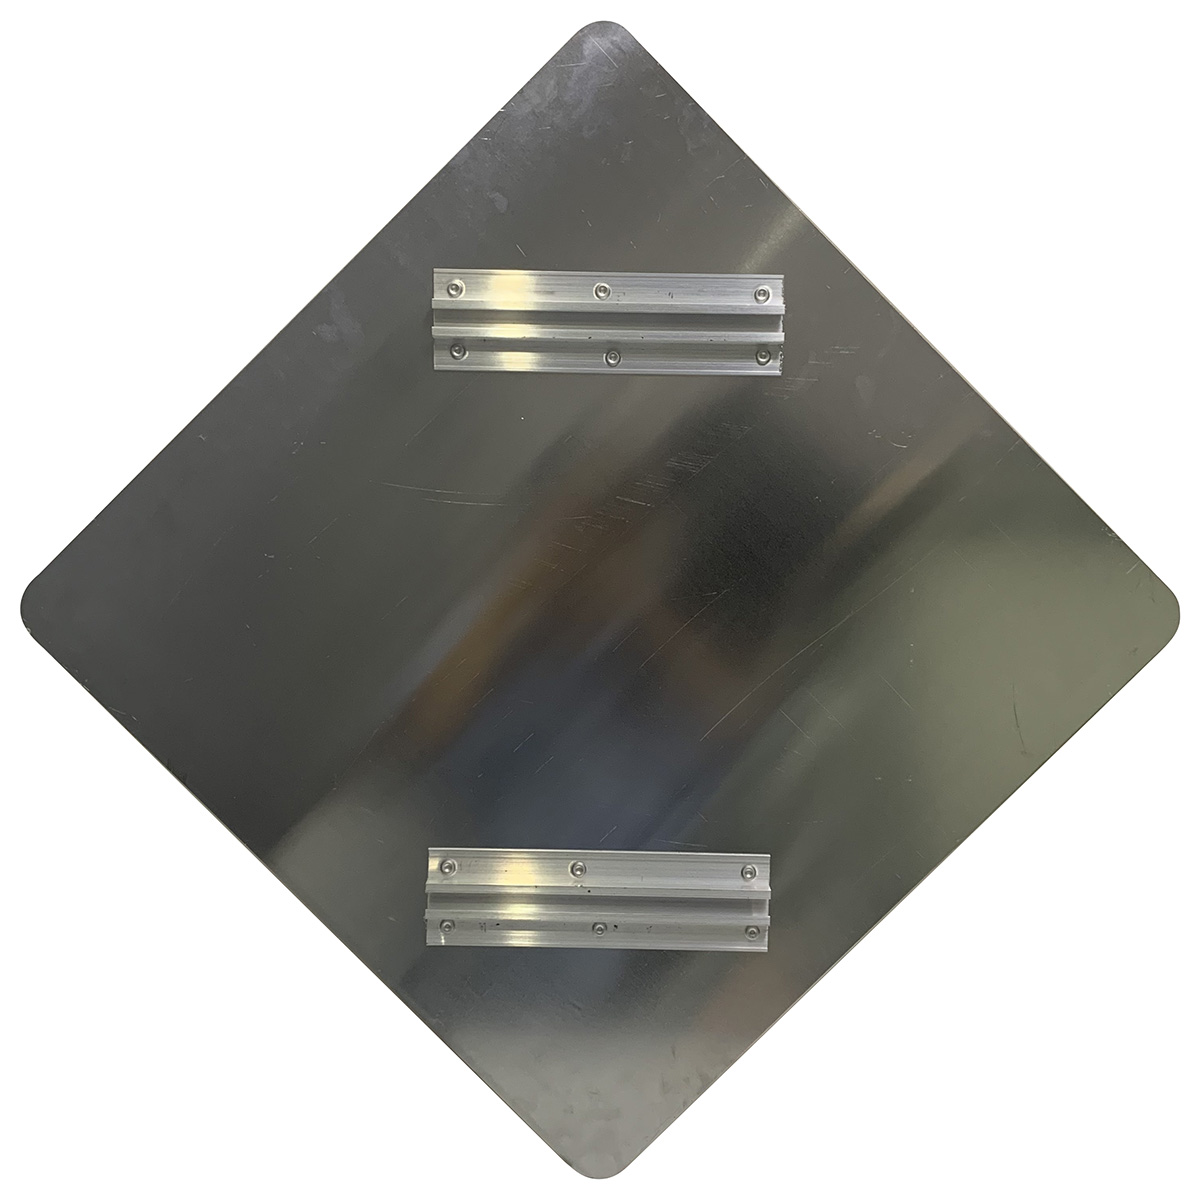 "GIRE A LA DERECHA " Placa de aluminio reflectante para señalización de tráfico